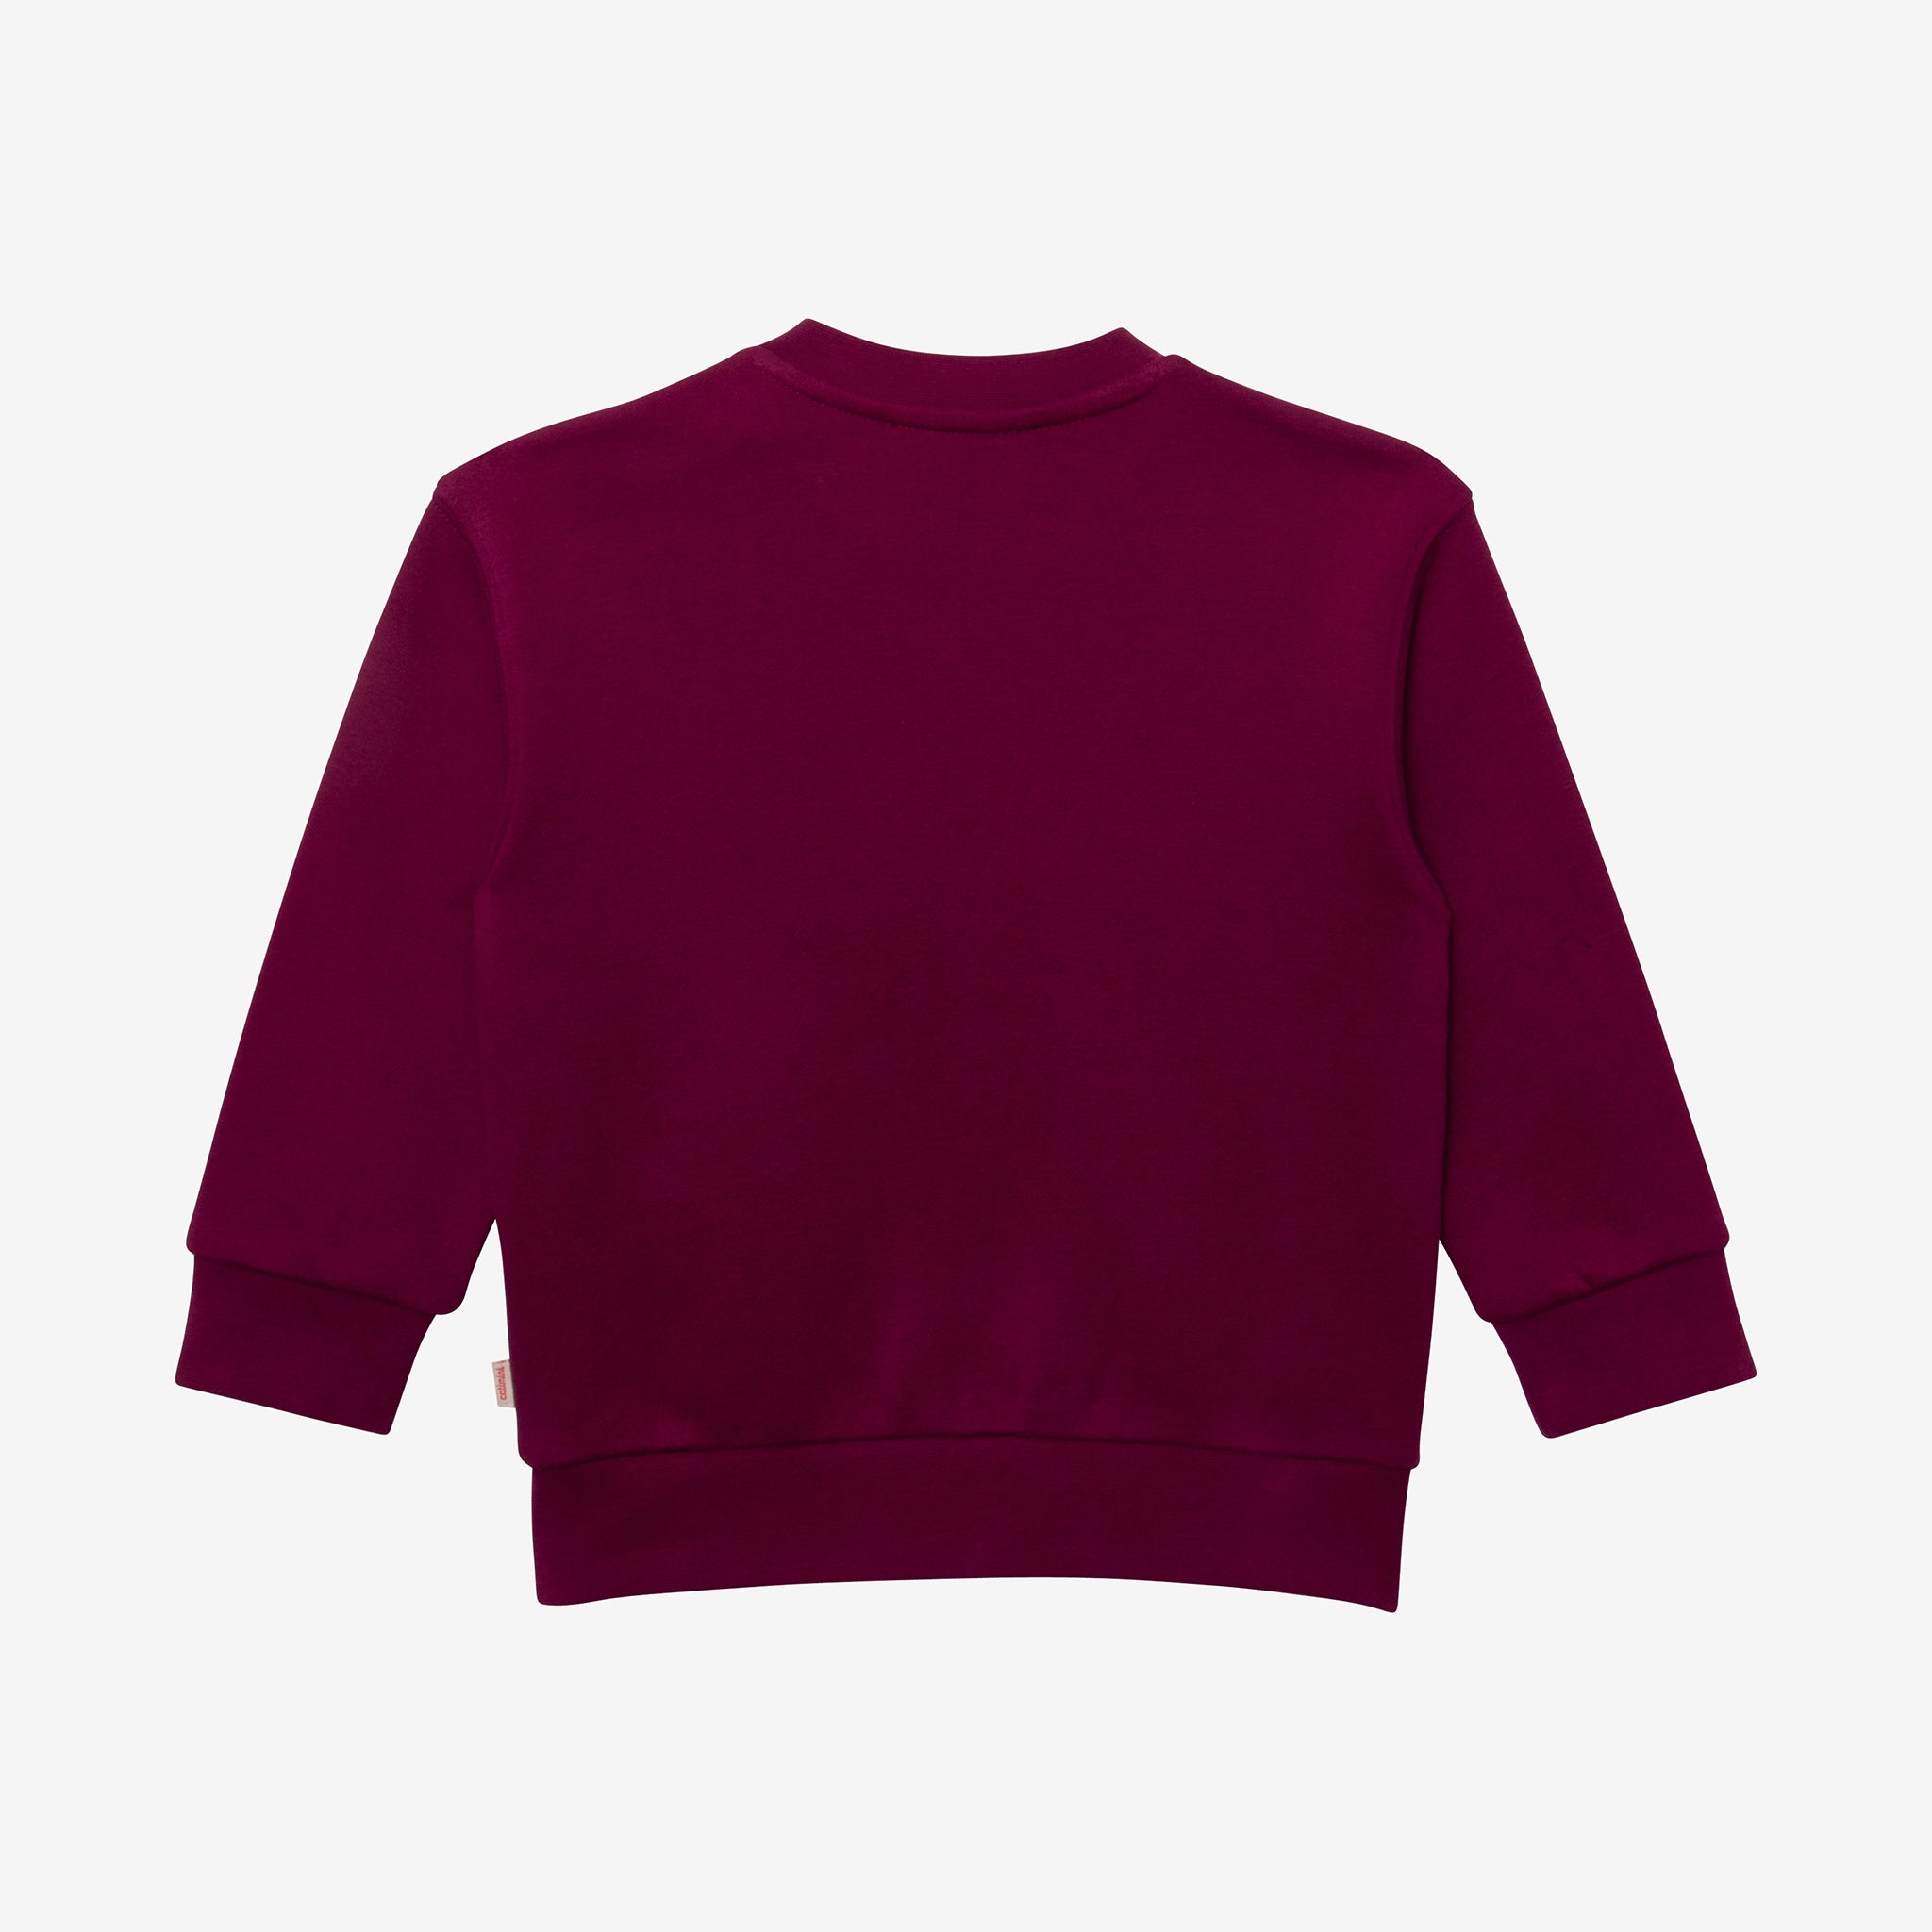 Toddler boys\' purple sweatshirt | Catimini USA